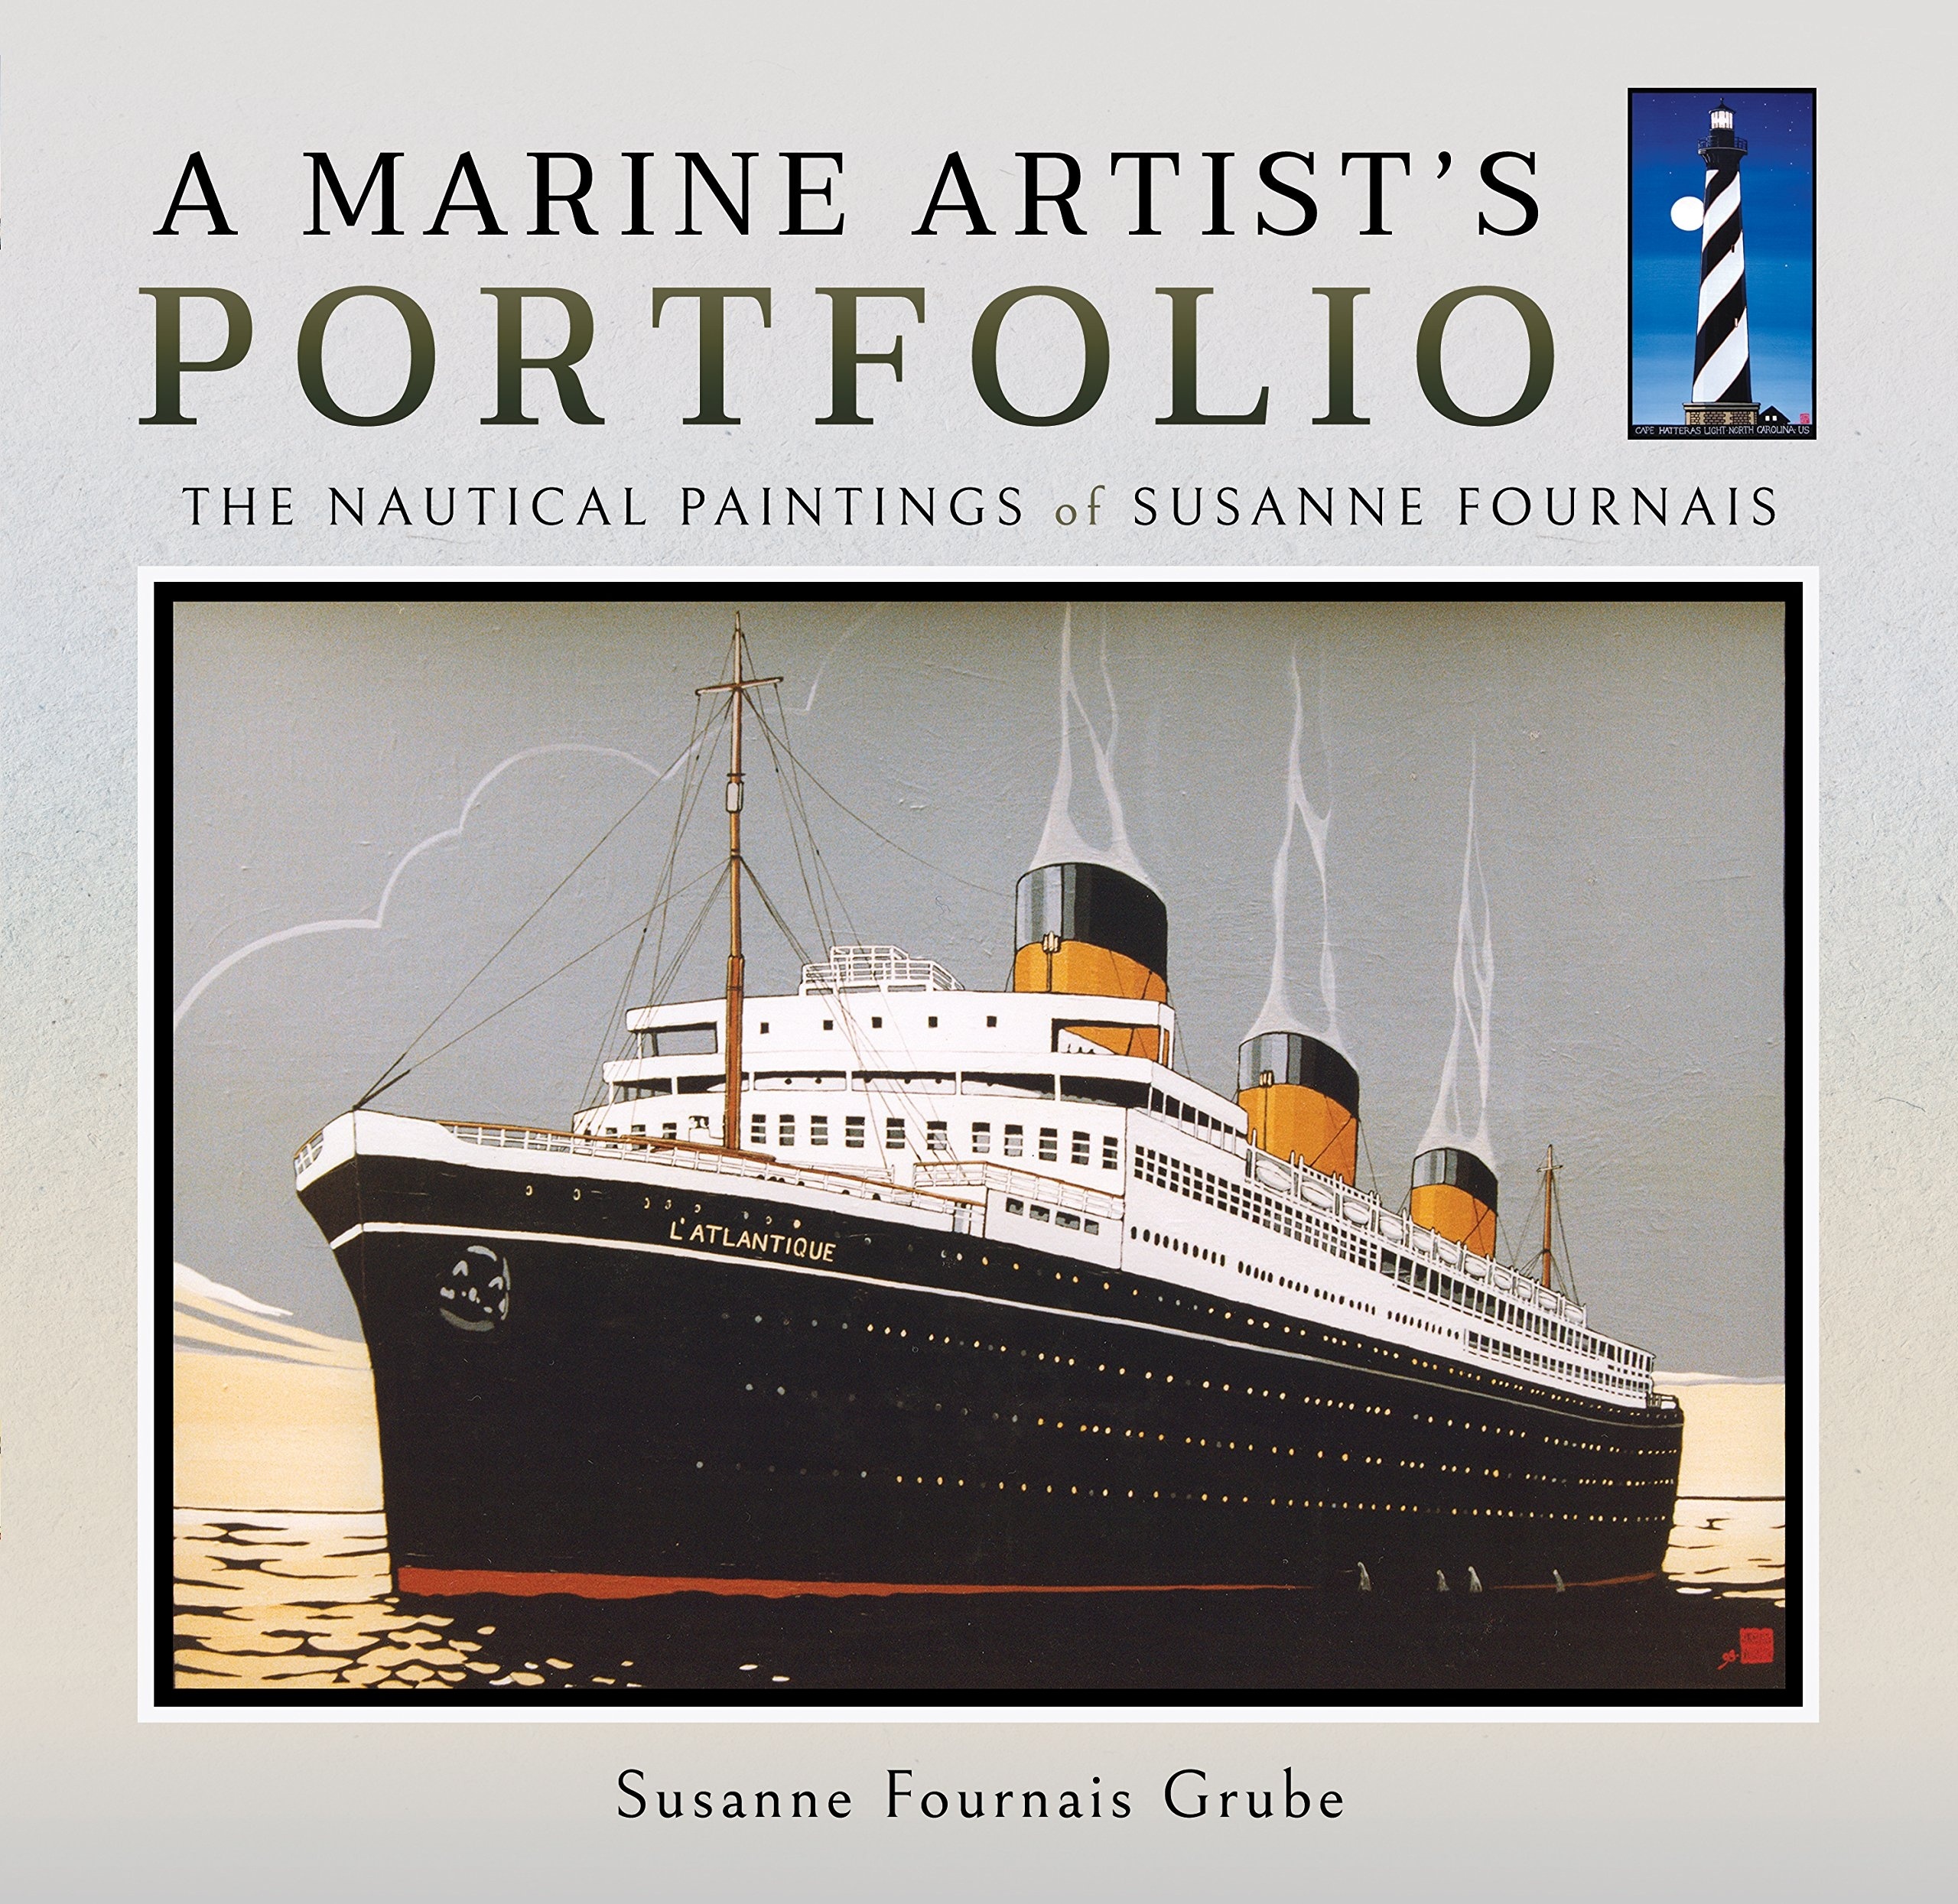 A Marine Artist's Portfolio "The Nautical Paintings of Susanne Fournais"